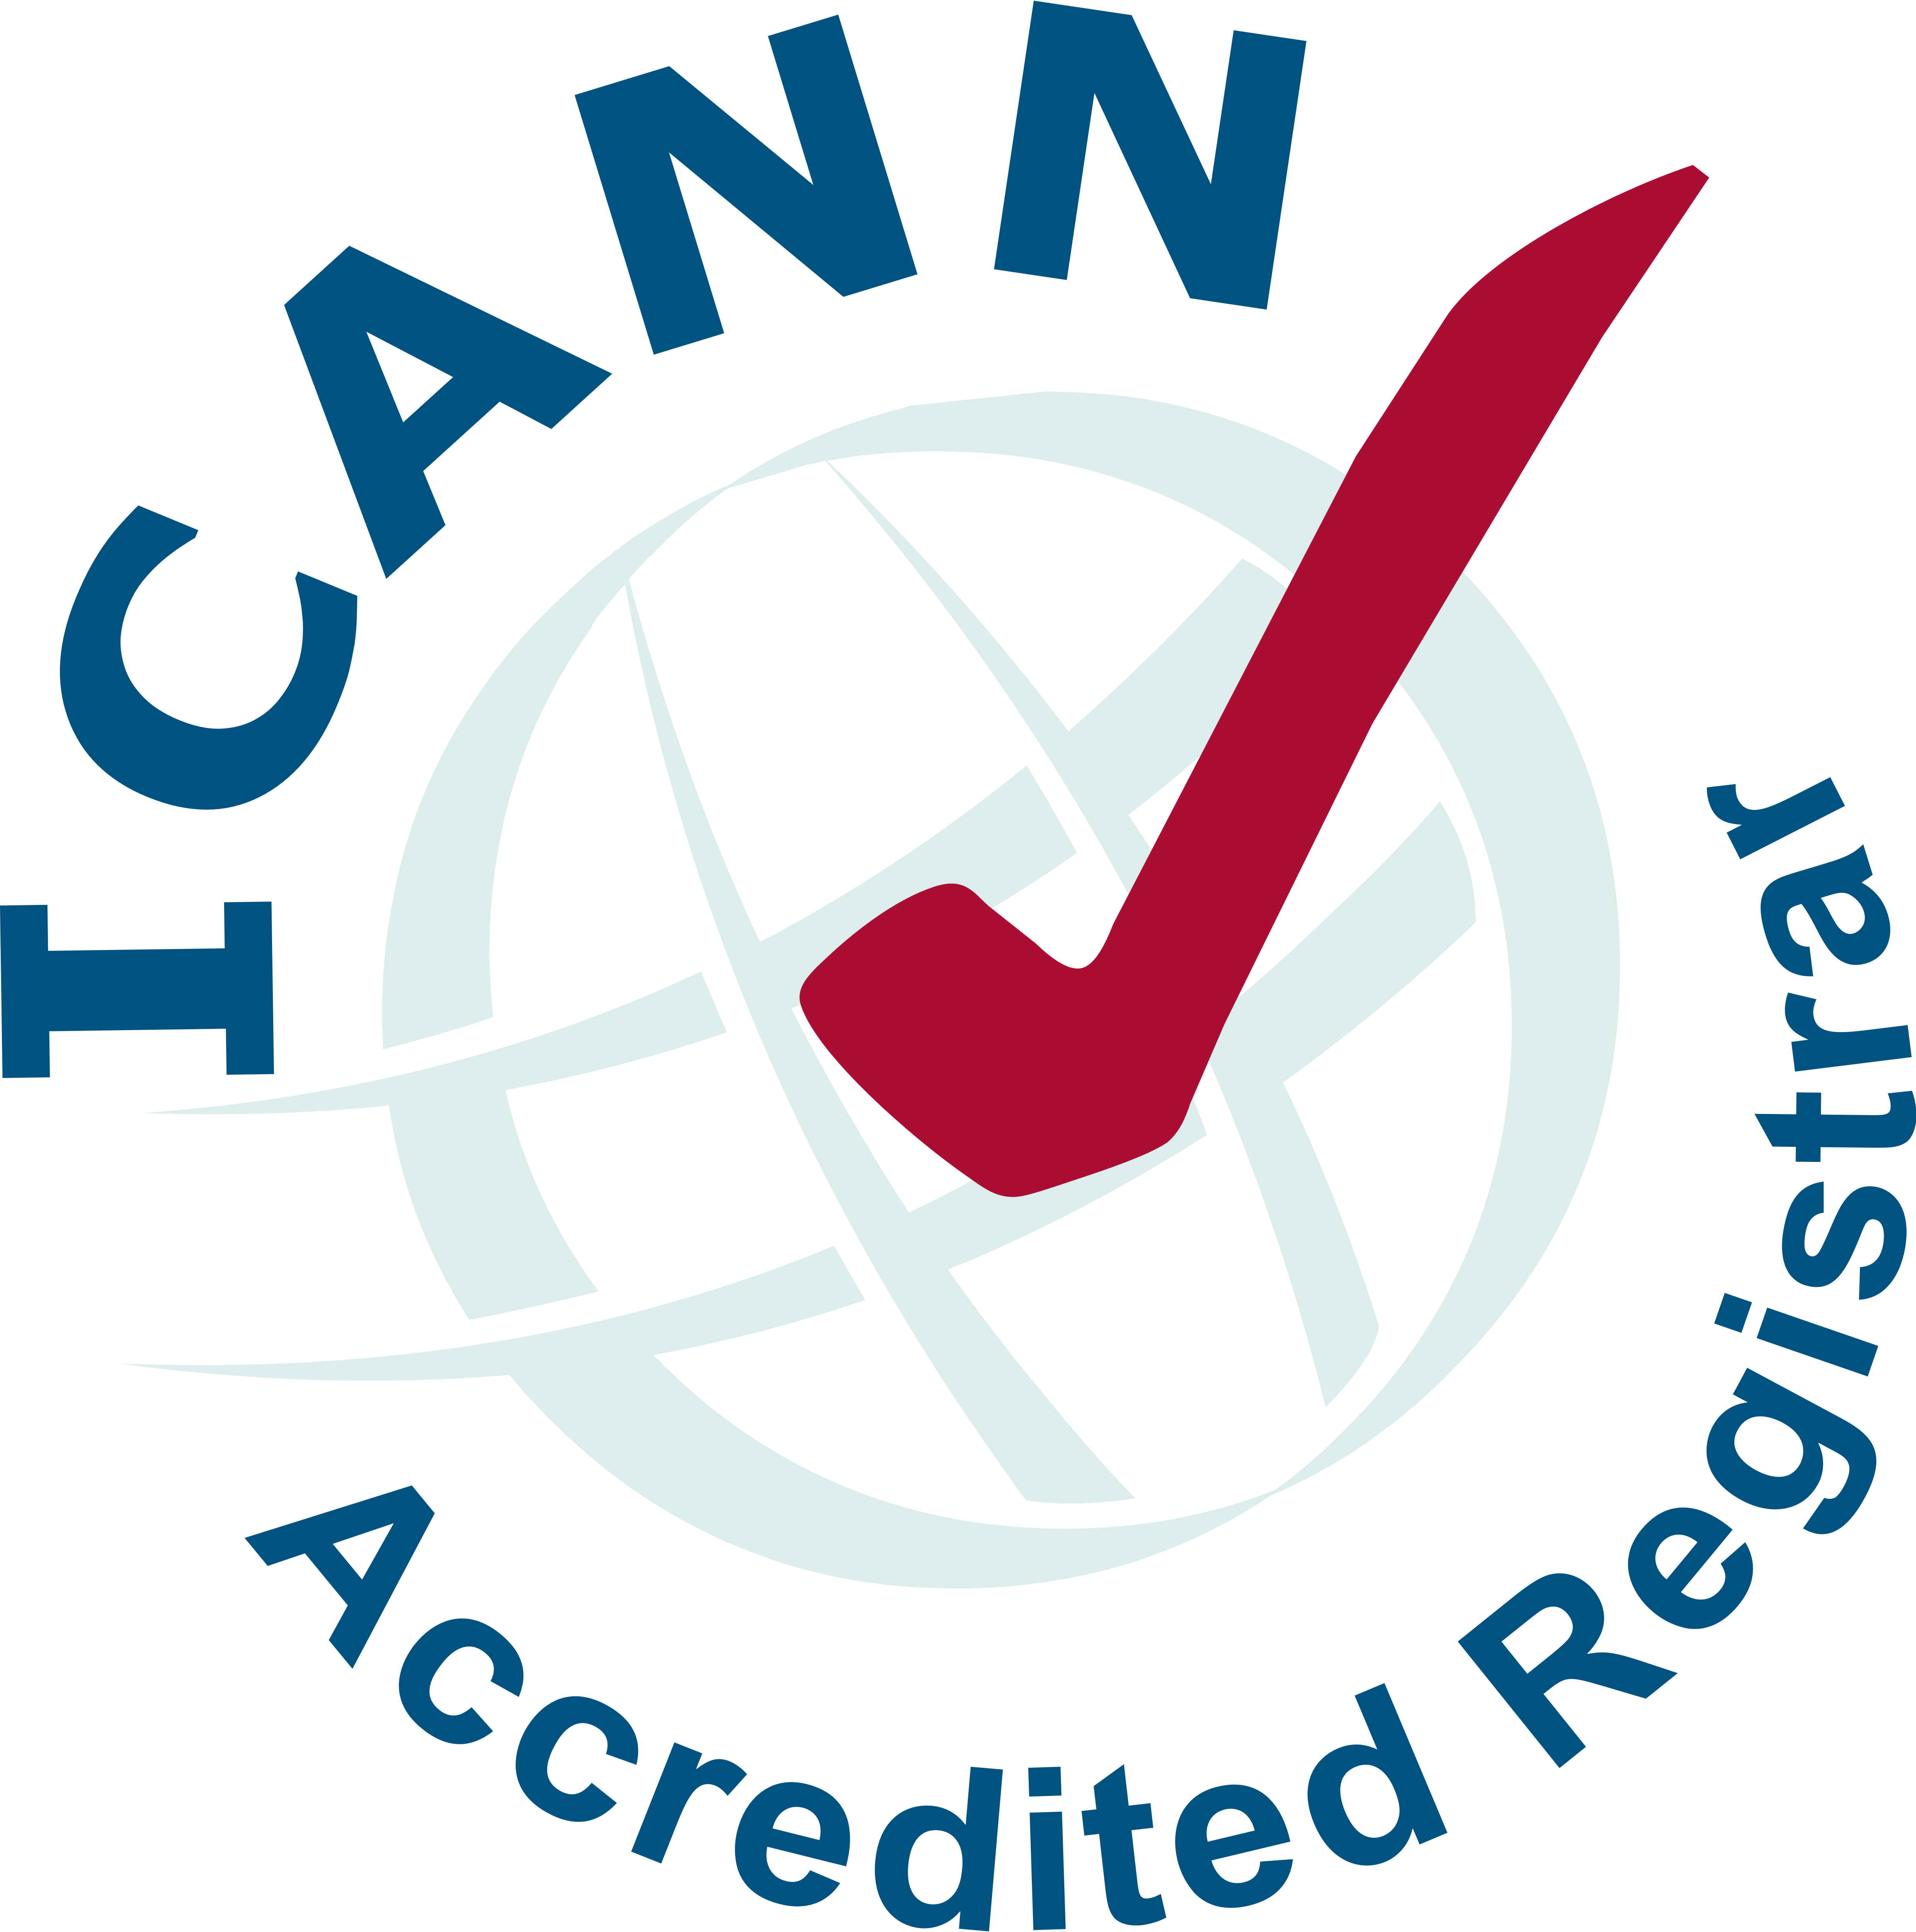 Icann Logo PNG-PlusPNG.com-59